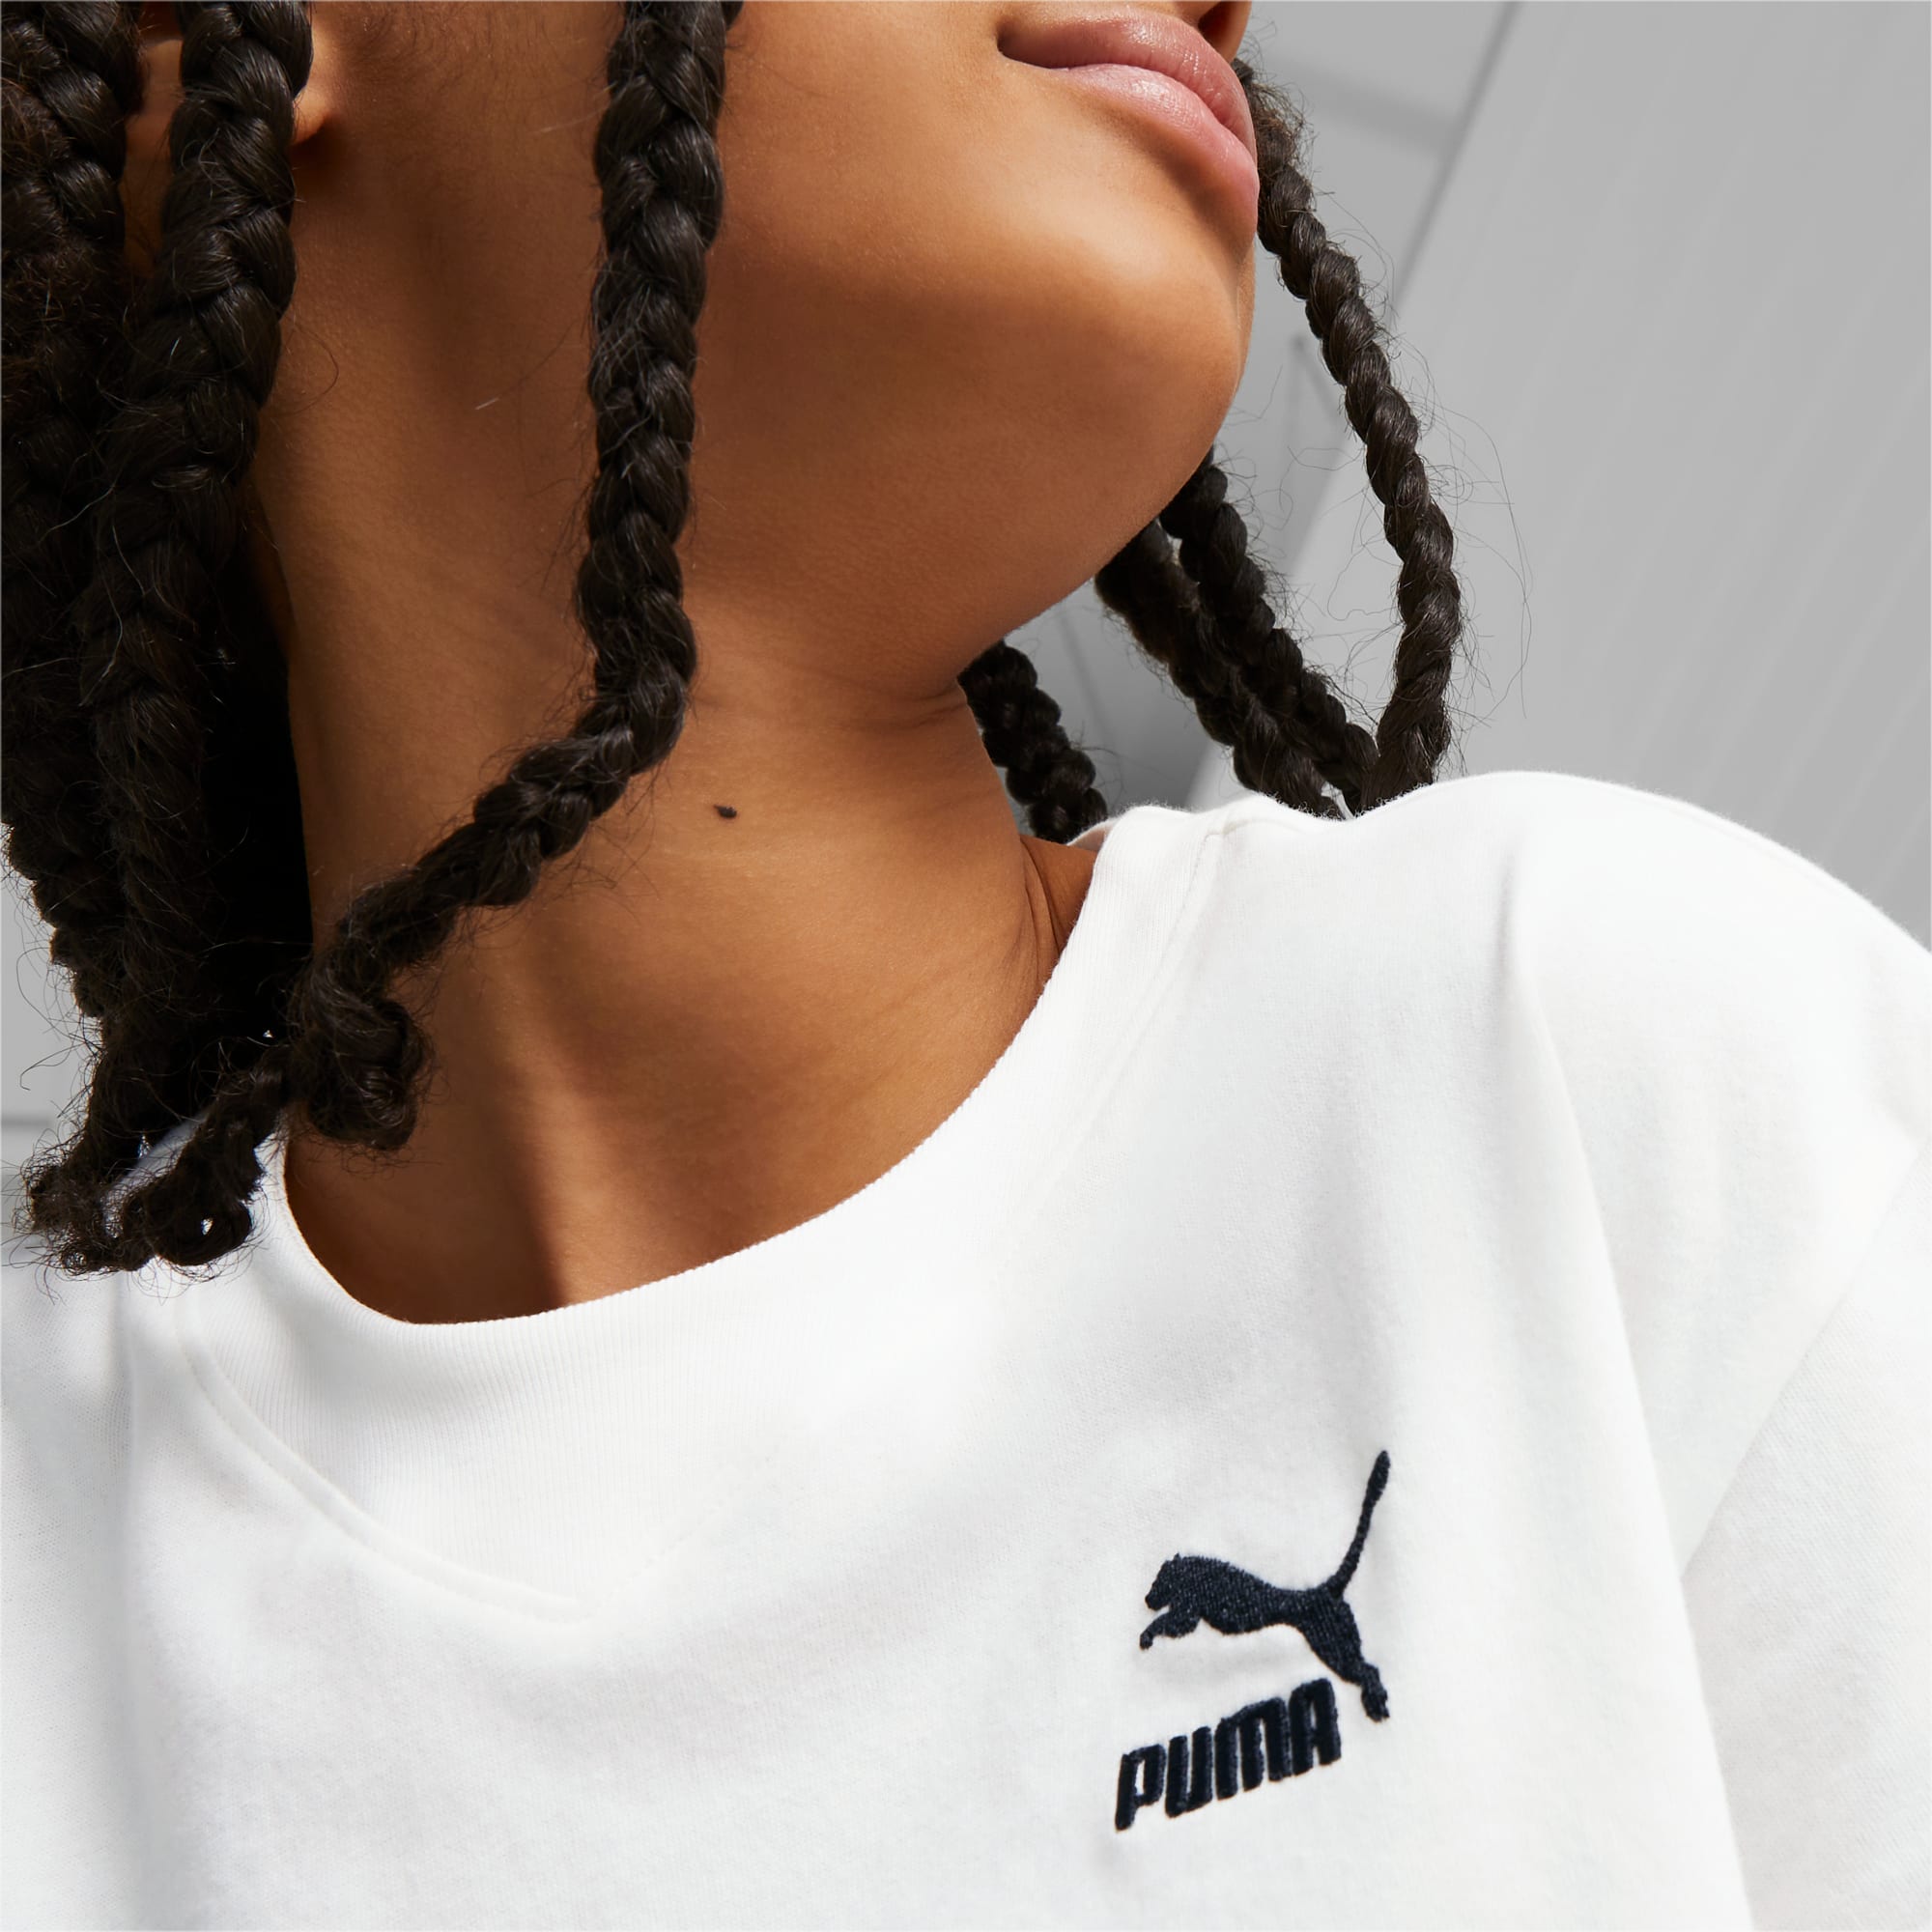 PUMA Classics T-Shirt Jugend Für Kinder, Weiß, Größe: 140, Kleidung